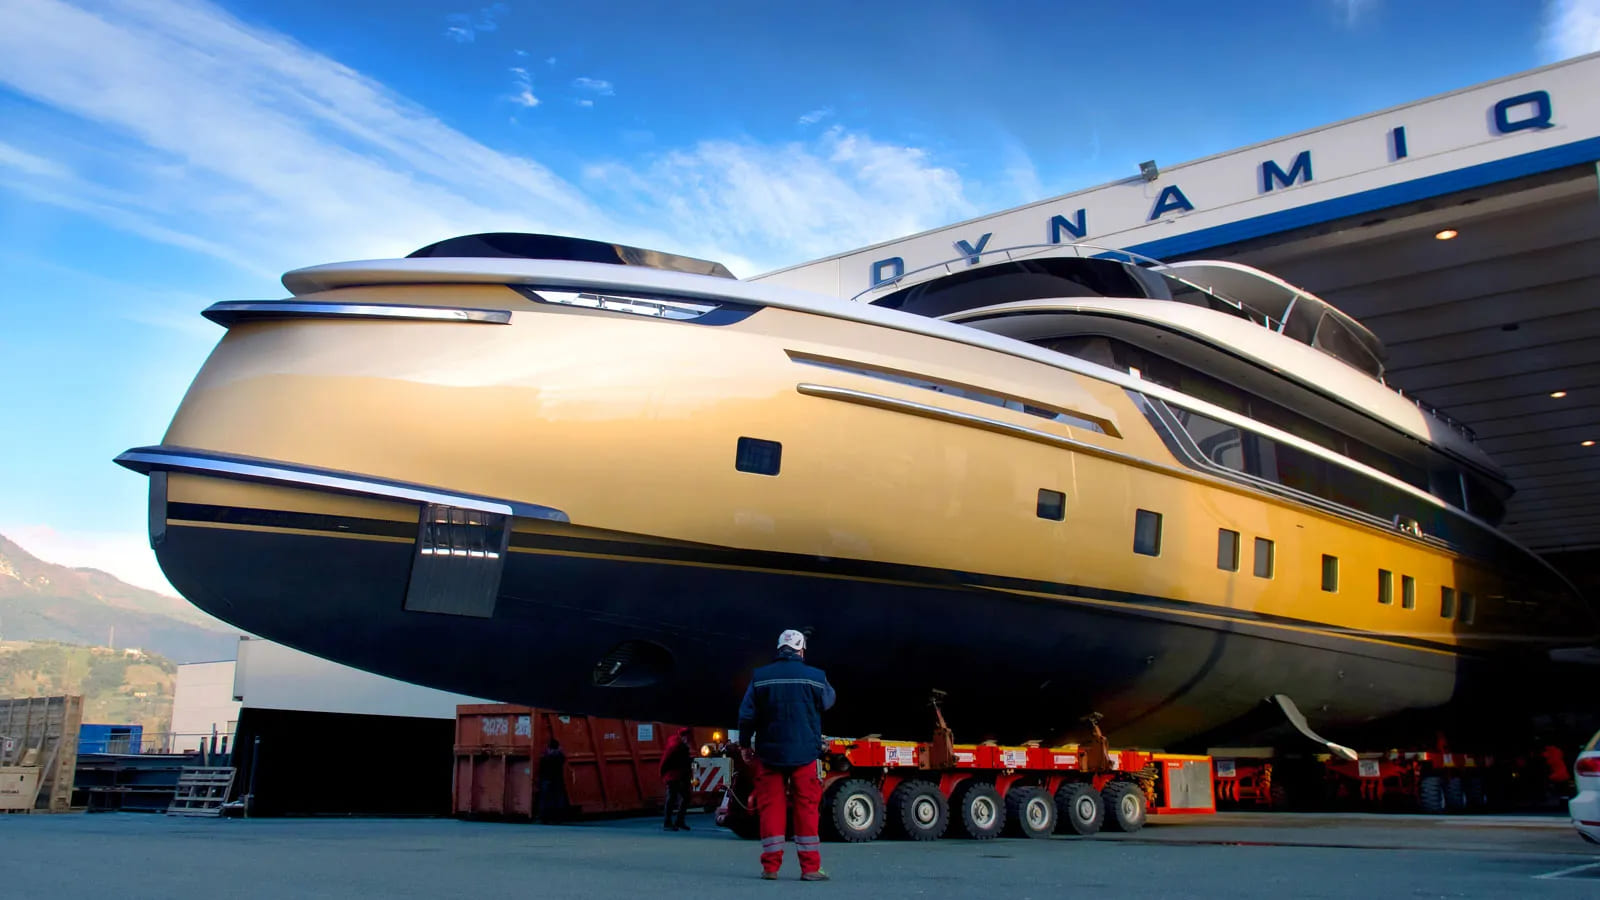 Dynamiq GTT 135 superiate dourado - boat shopping